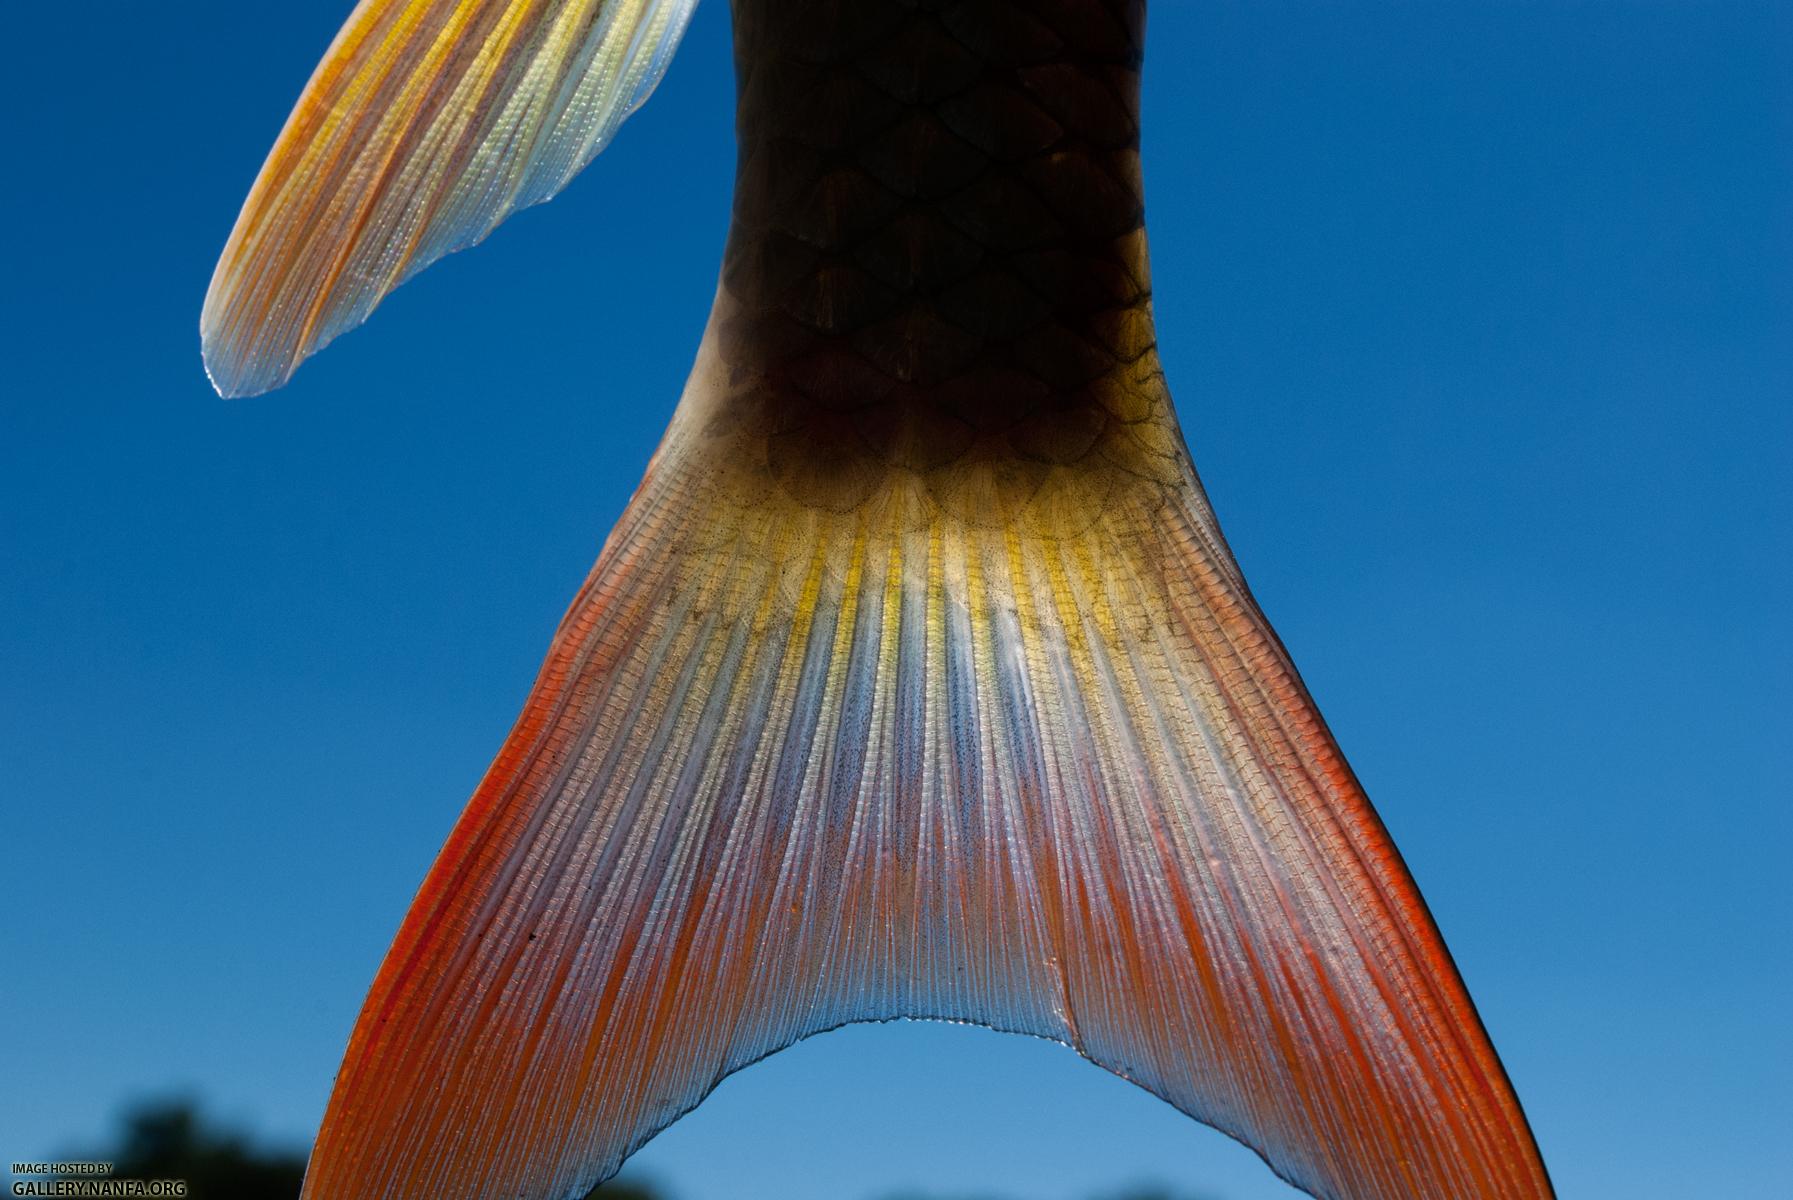 Shorthead redhorse (Moxostoma macrolepidotum) tail